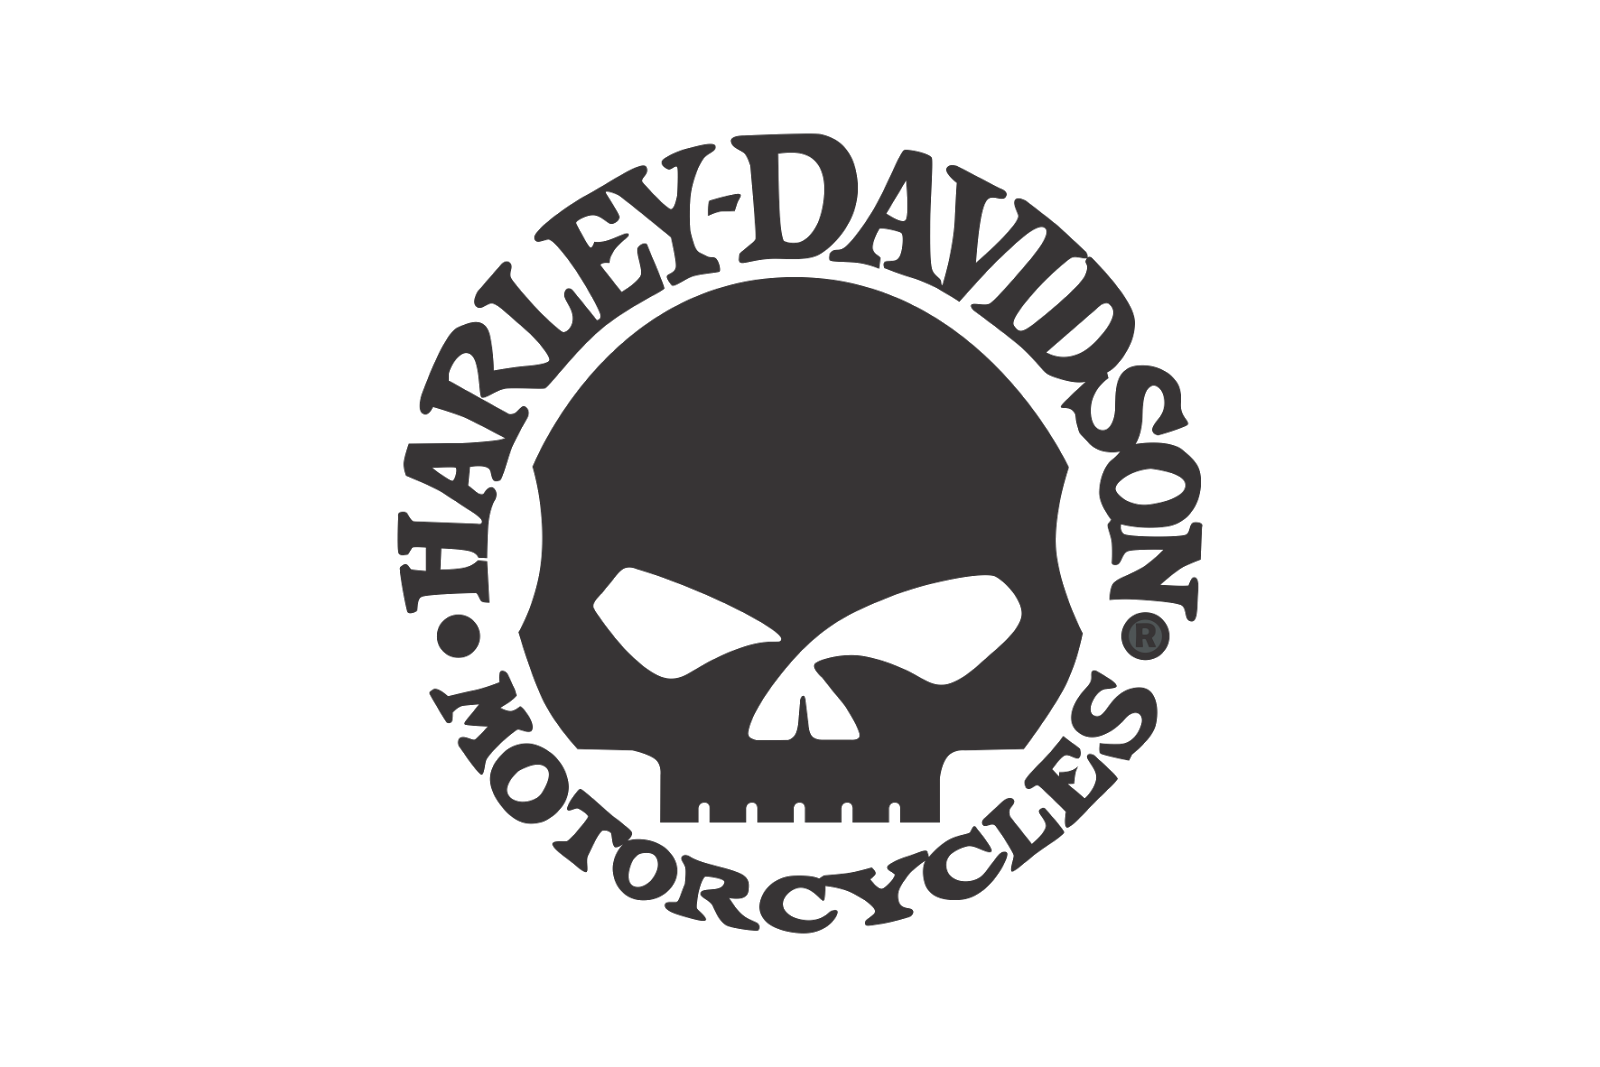  Harley  Davidson  Skull Logo 